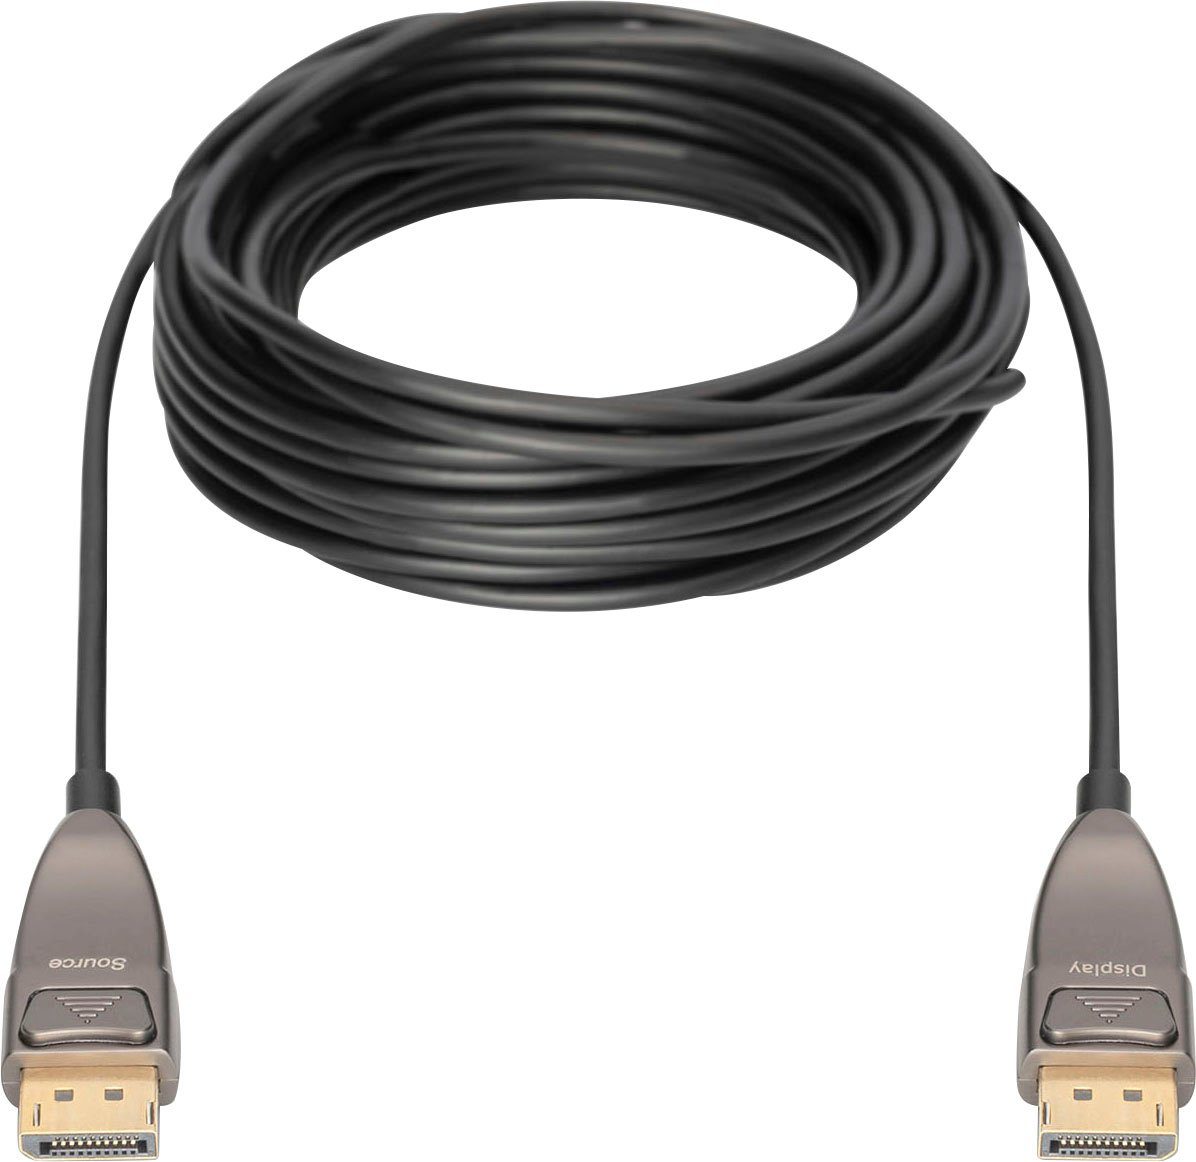 Hybrid (1500 UHD Glasfaserkabel, cm) AOC SAT-Kabel, 8K Digitus DisplayPort DisplayPort™